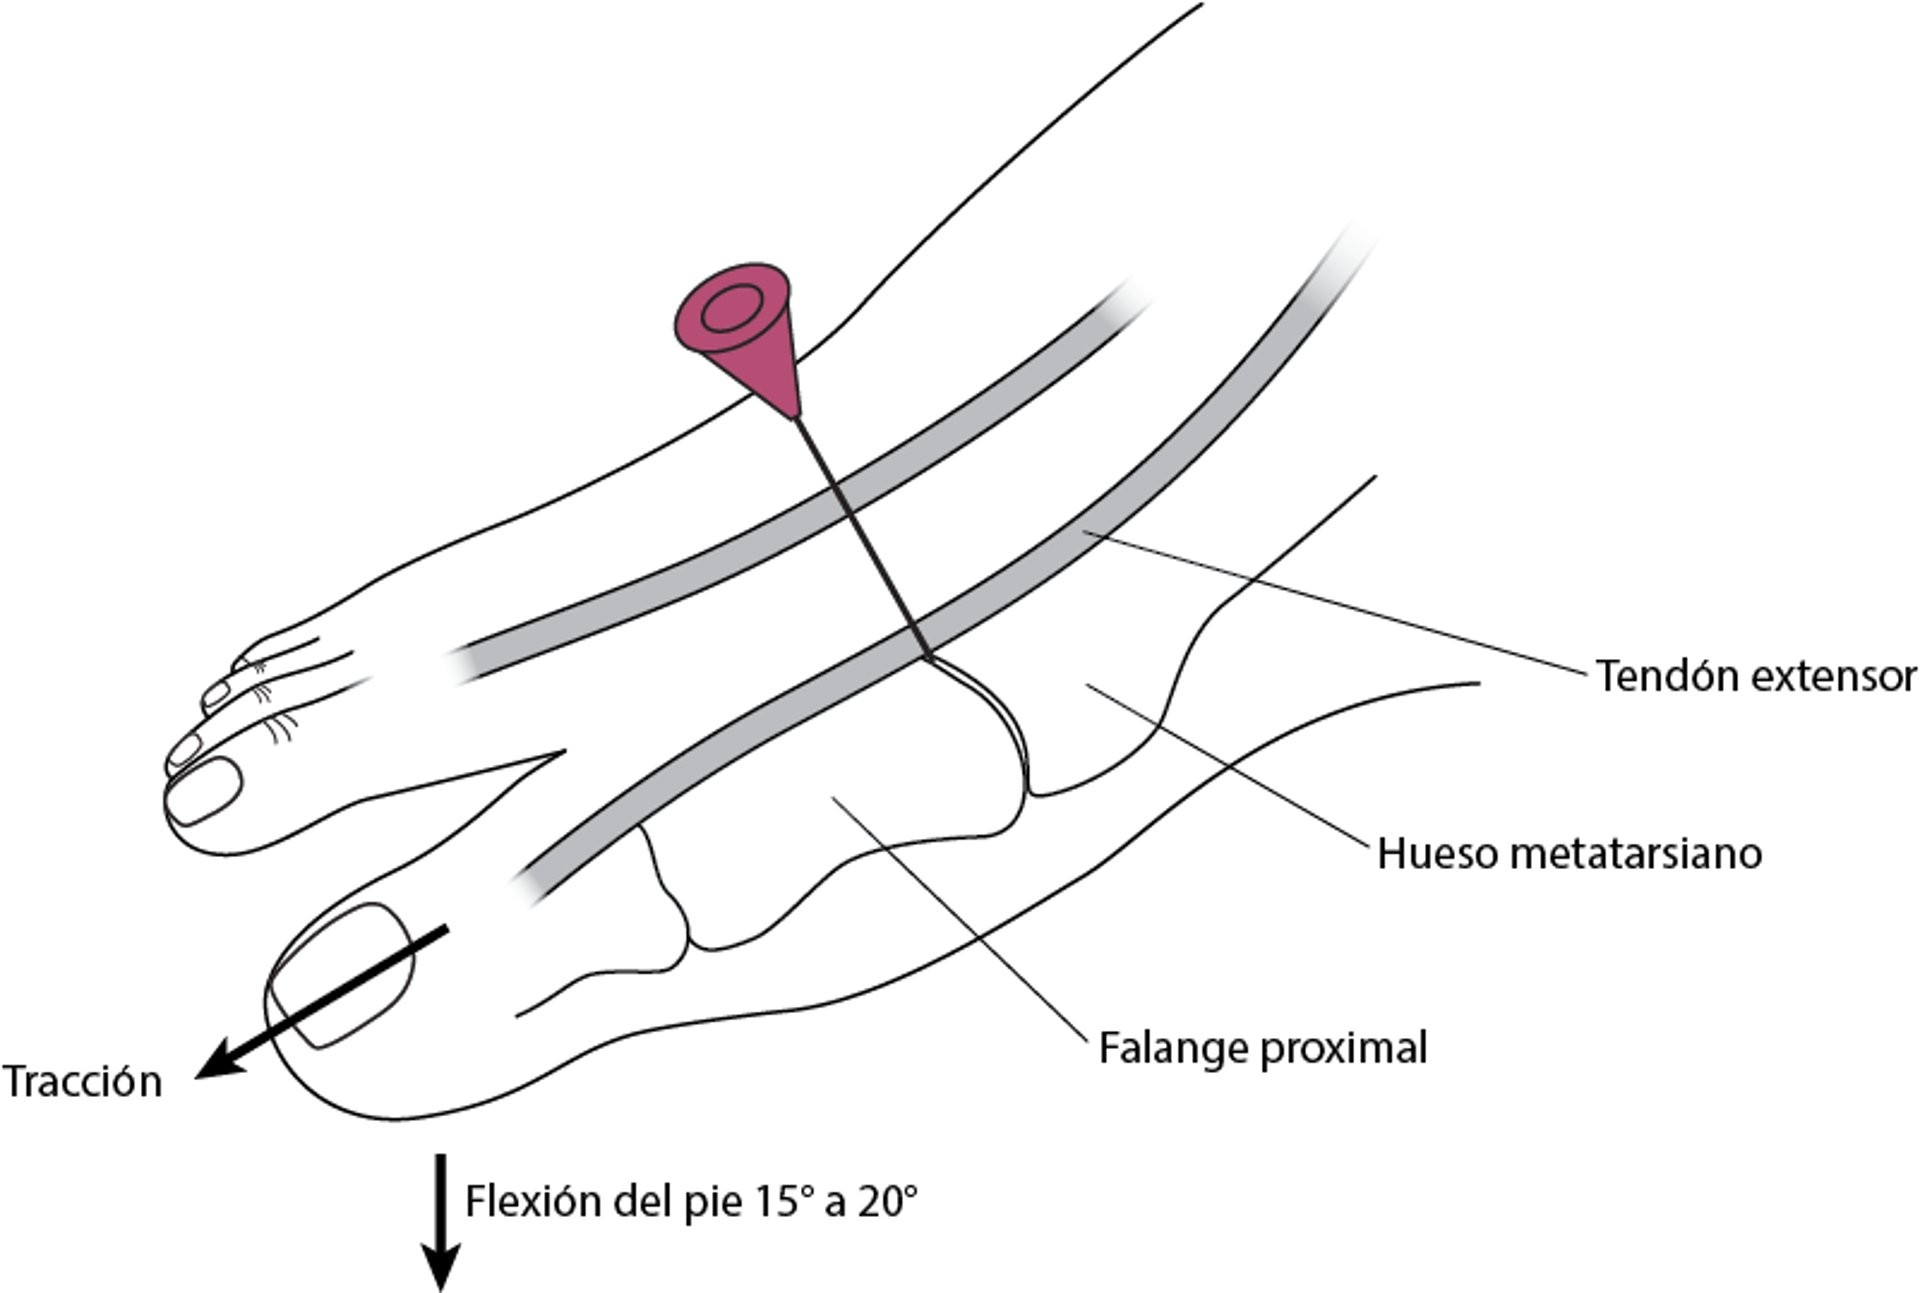 Artrocentesis de la articulación metatarsofalángica